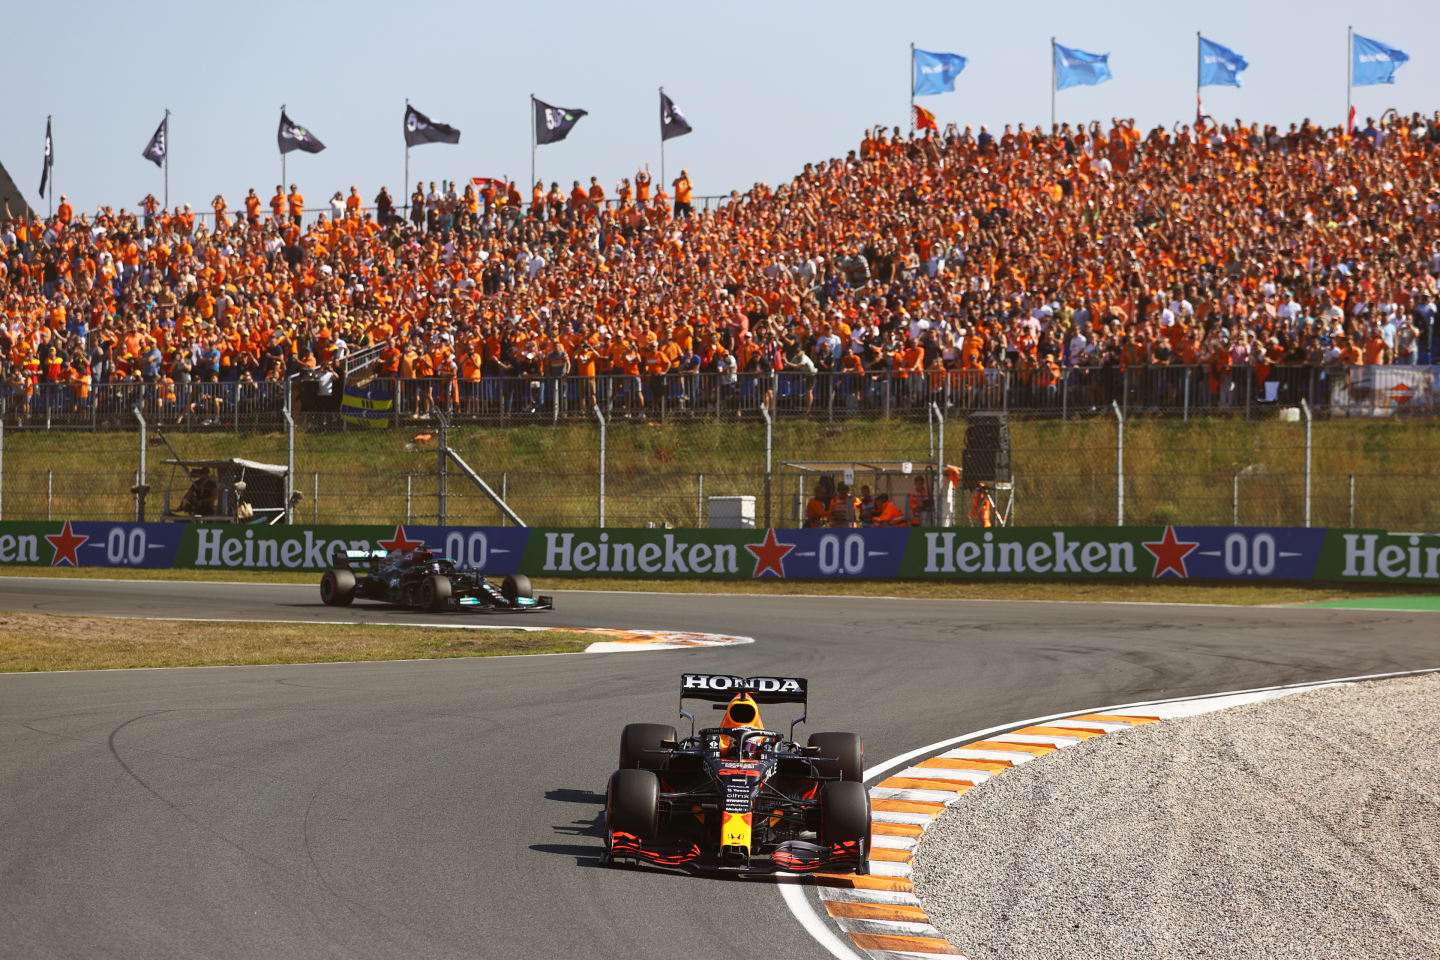 ZANDVOORT, NETHERLANDS - SEPTEMBER 05: Max Verstappen of the Netherlands driving the (33) Red Bull